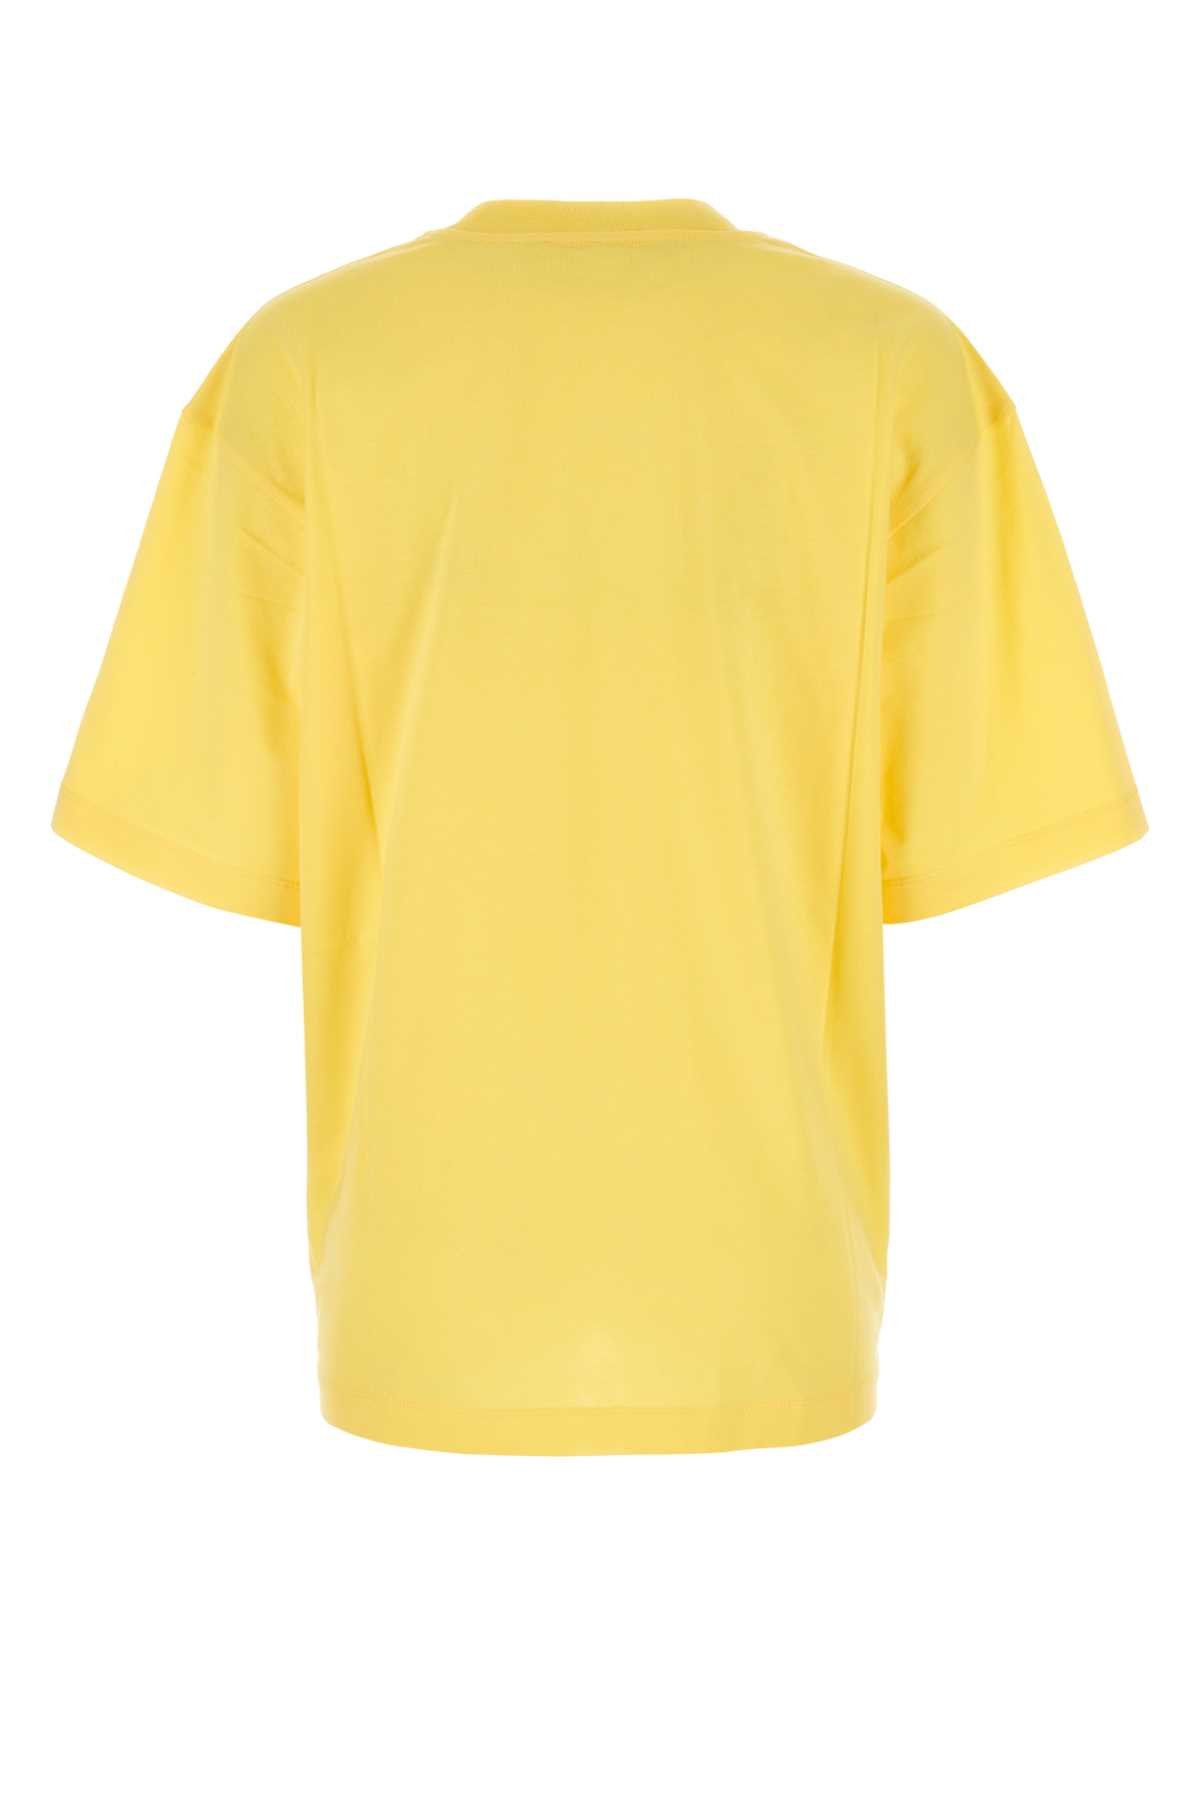 Marni Yellow Cotton Oversize T-shirt In Lemmon